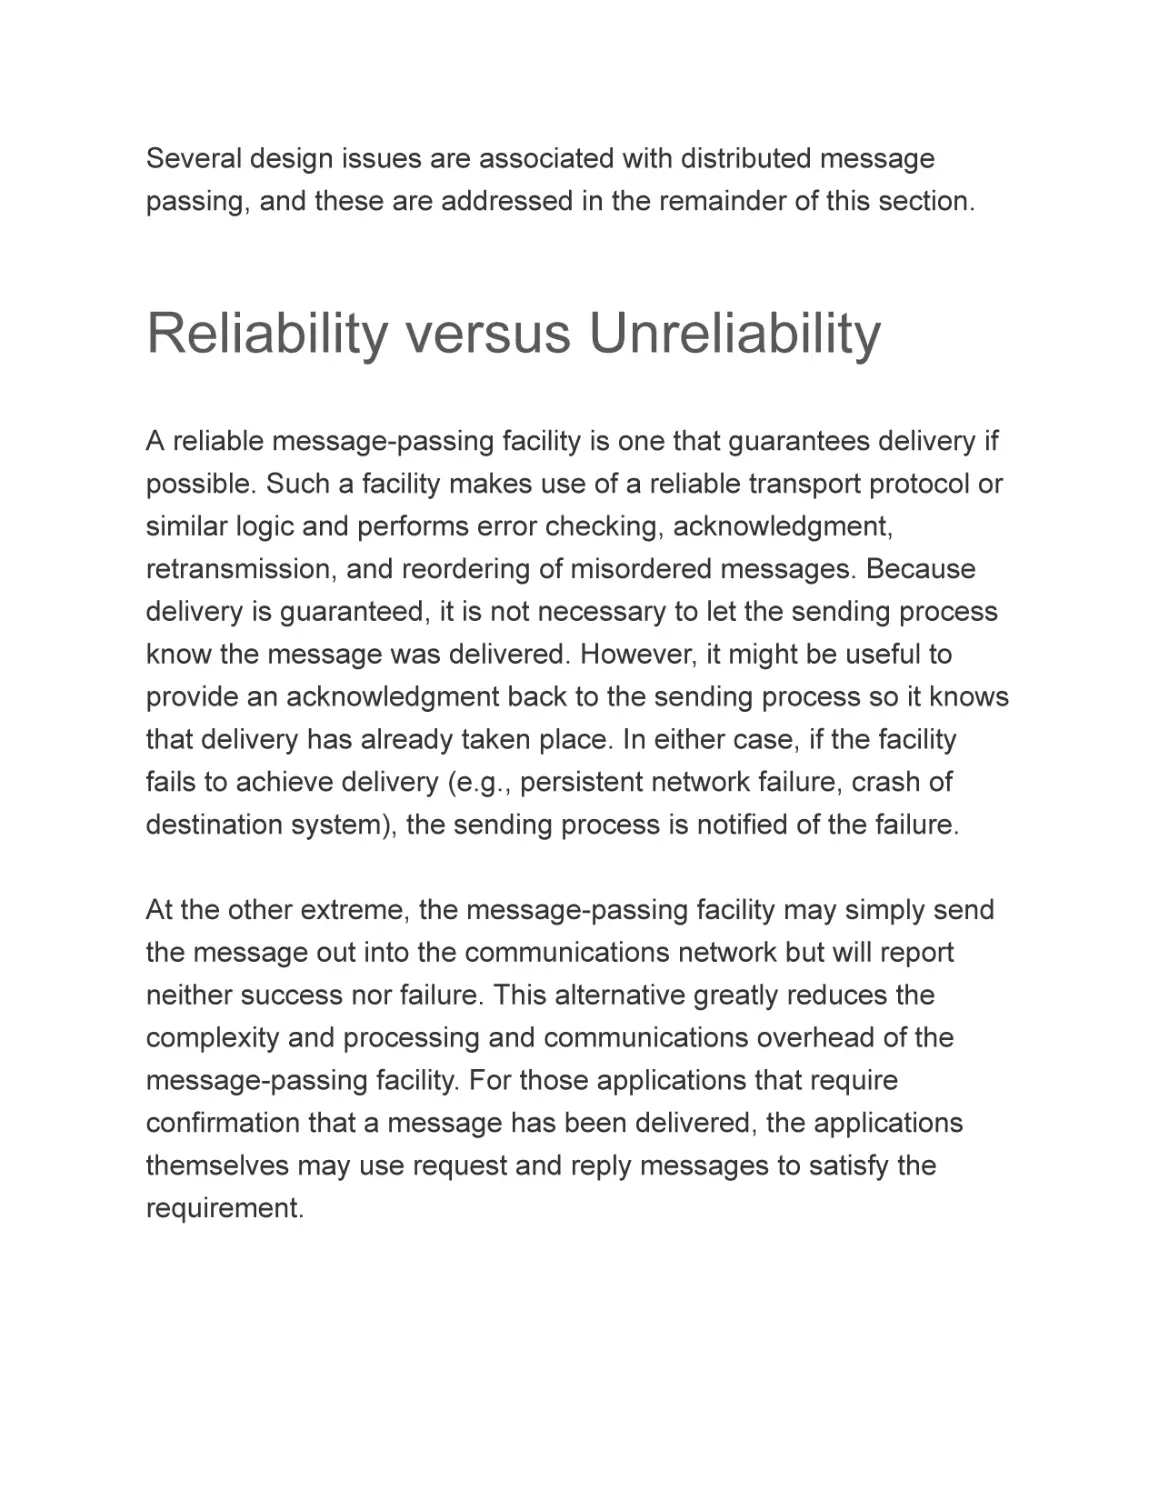 Reliability versus Unreliability